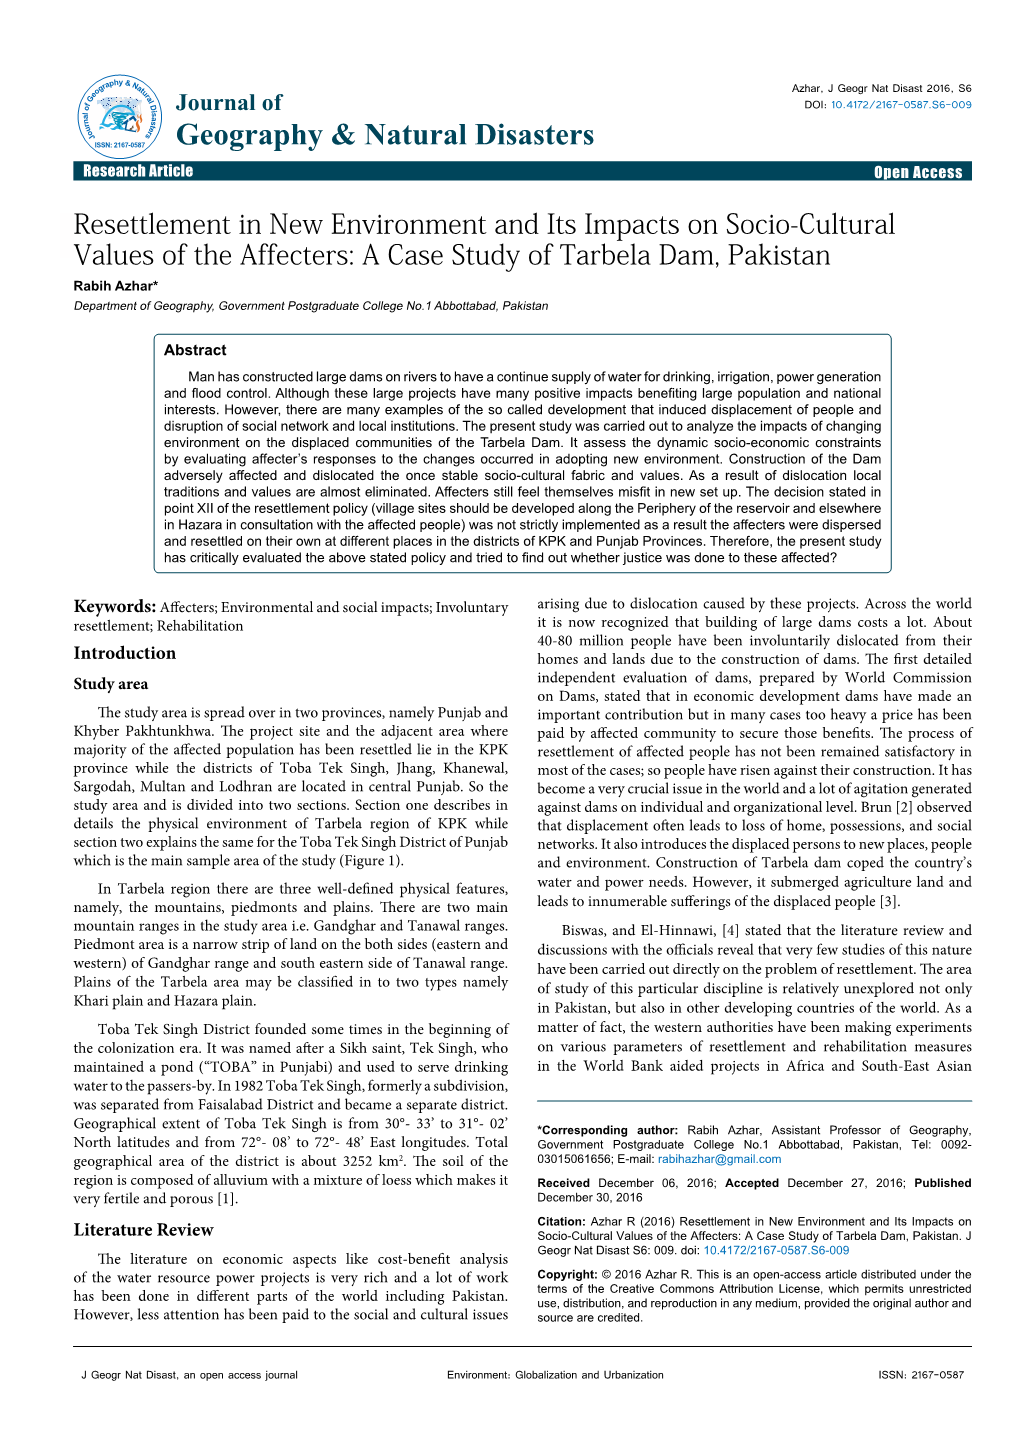 A Case Study of Tarbela Dam, Pakistan Rabih Azhar* Department of Geography, Government Postgraduate College No.1 Abbottabad, Pakistan